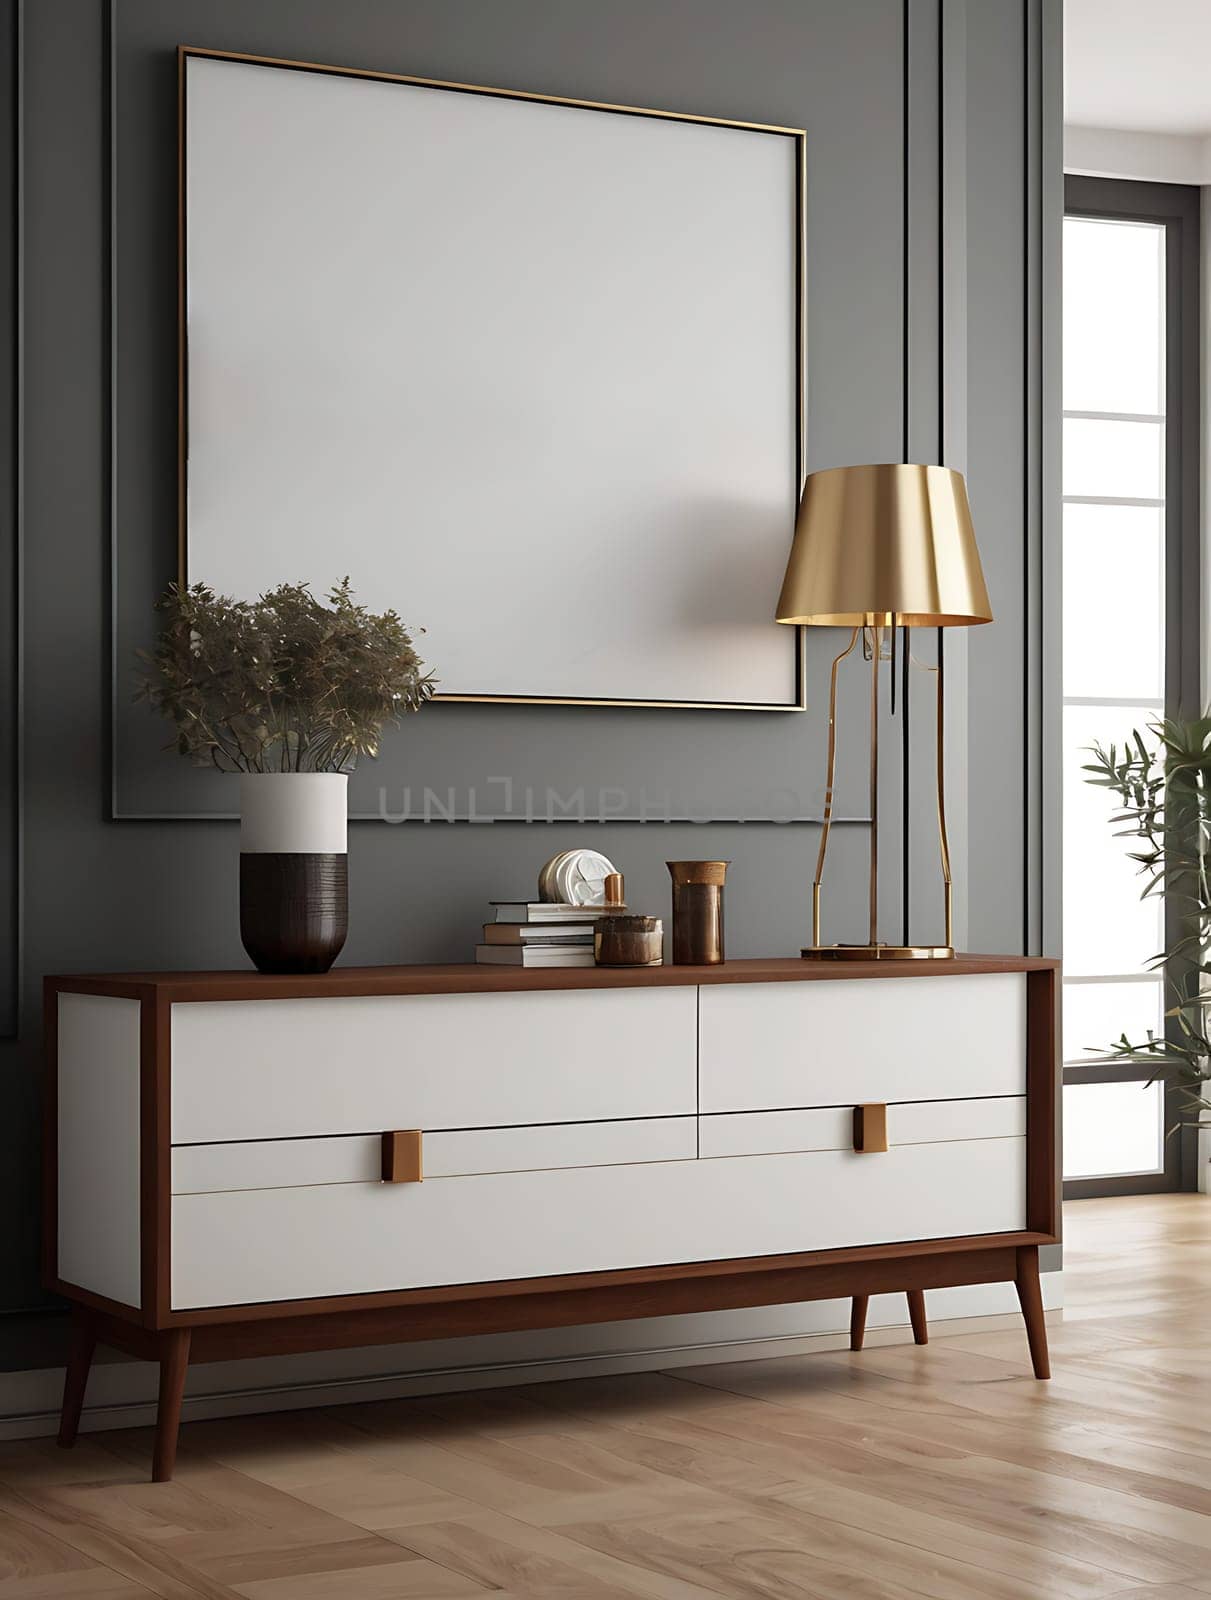 Blank empty cabinet wall mockup in modern minimalist interior design style. Contemporary living room interior concept. by maenjari